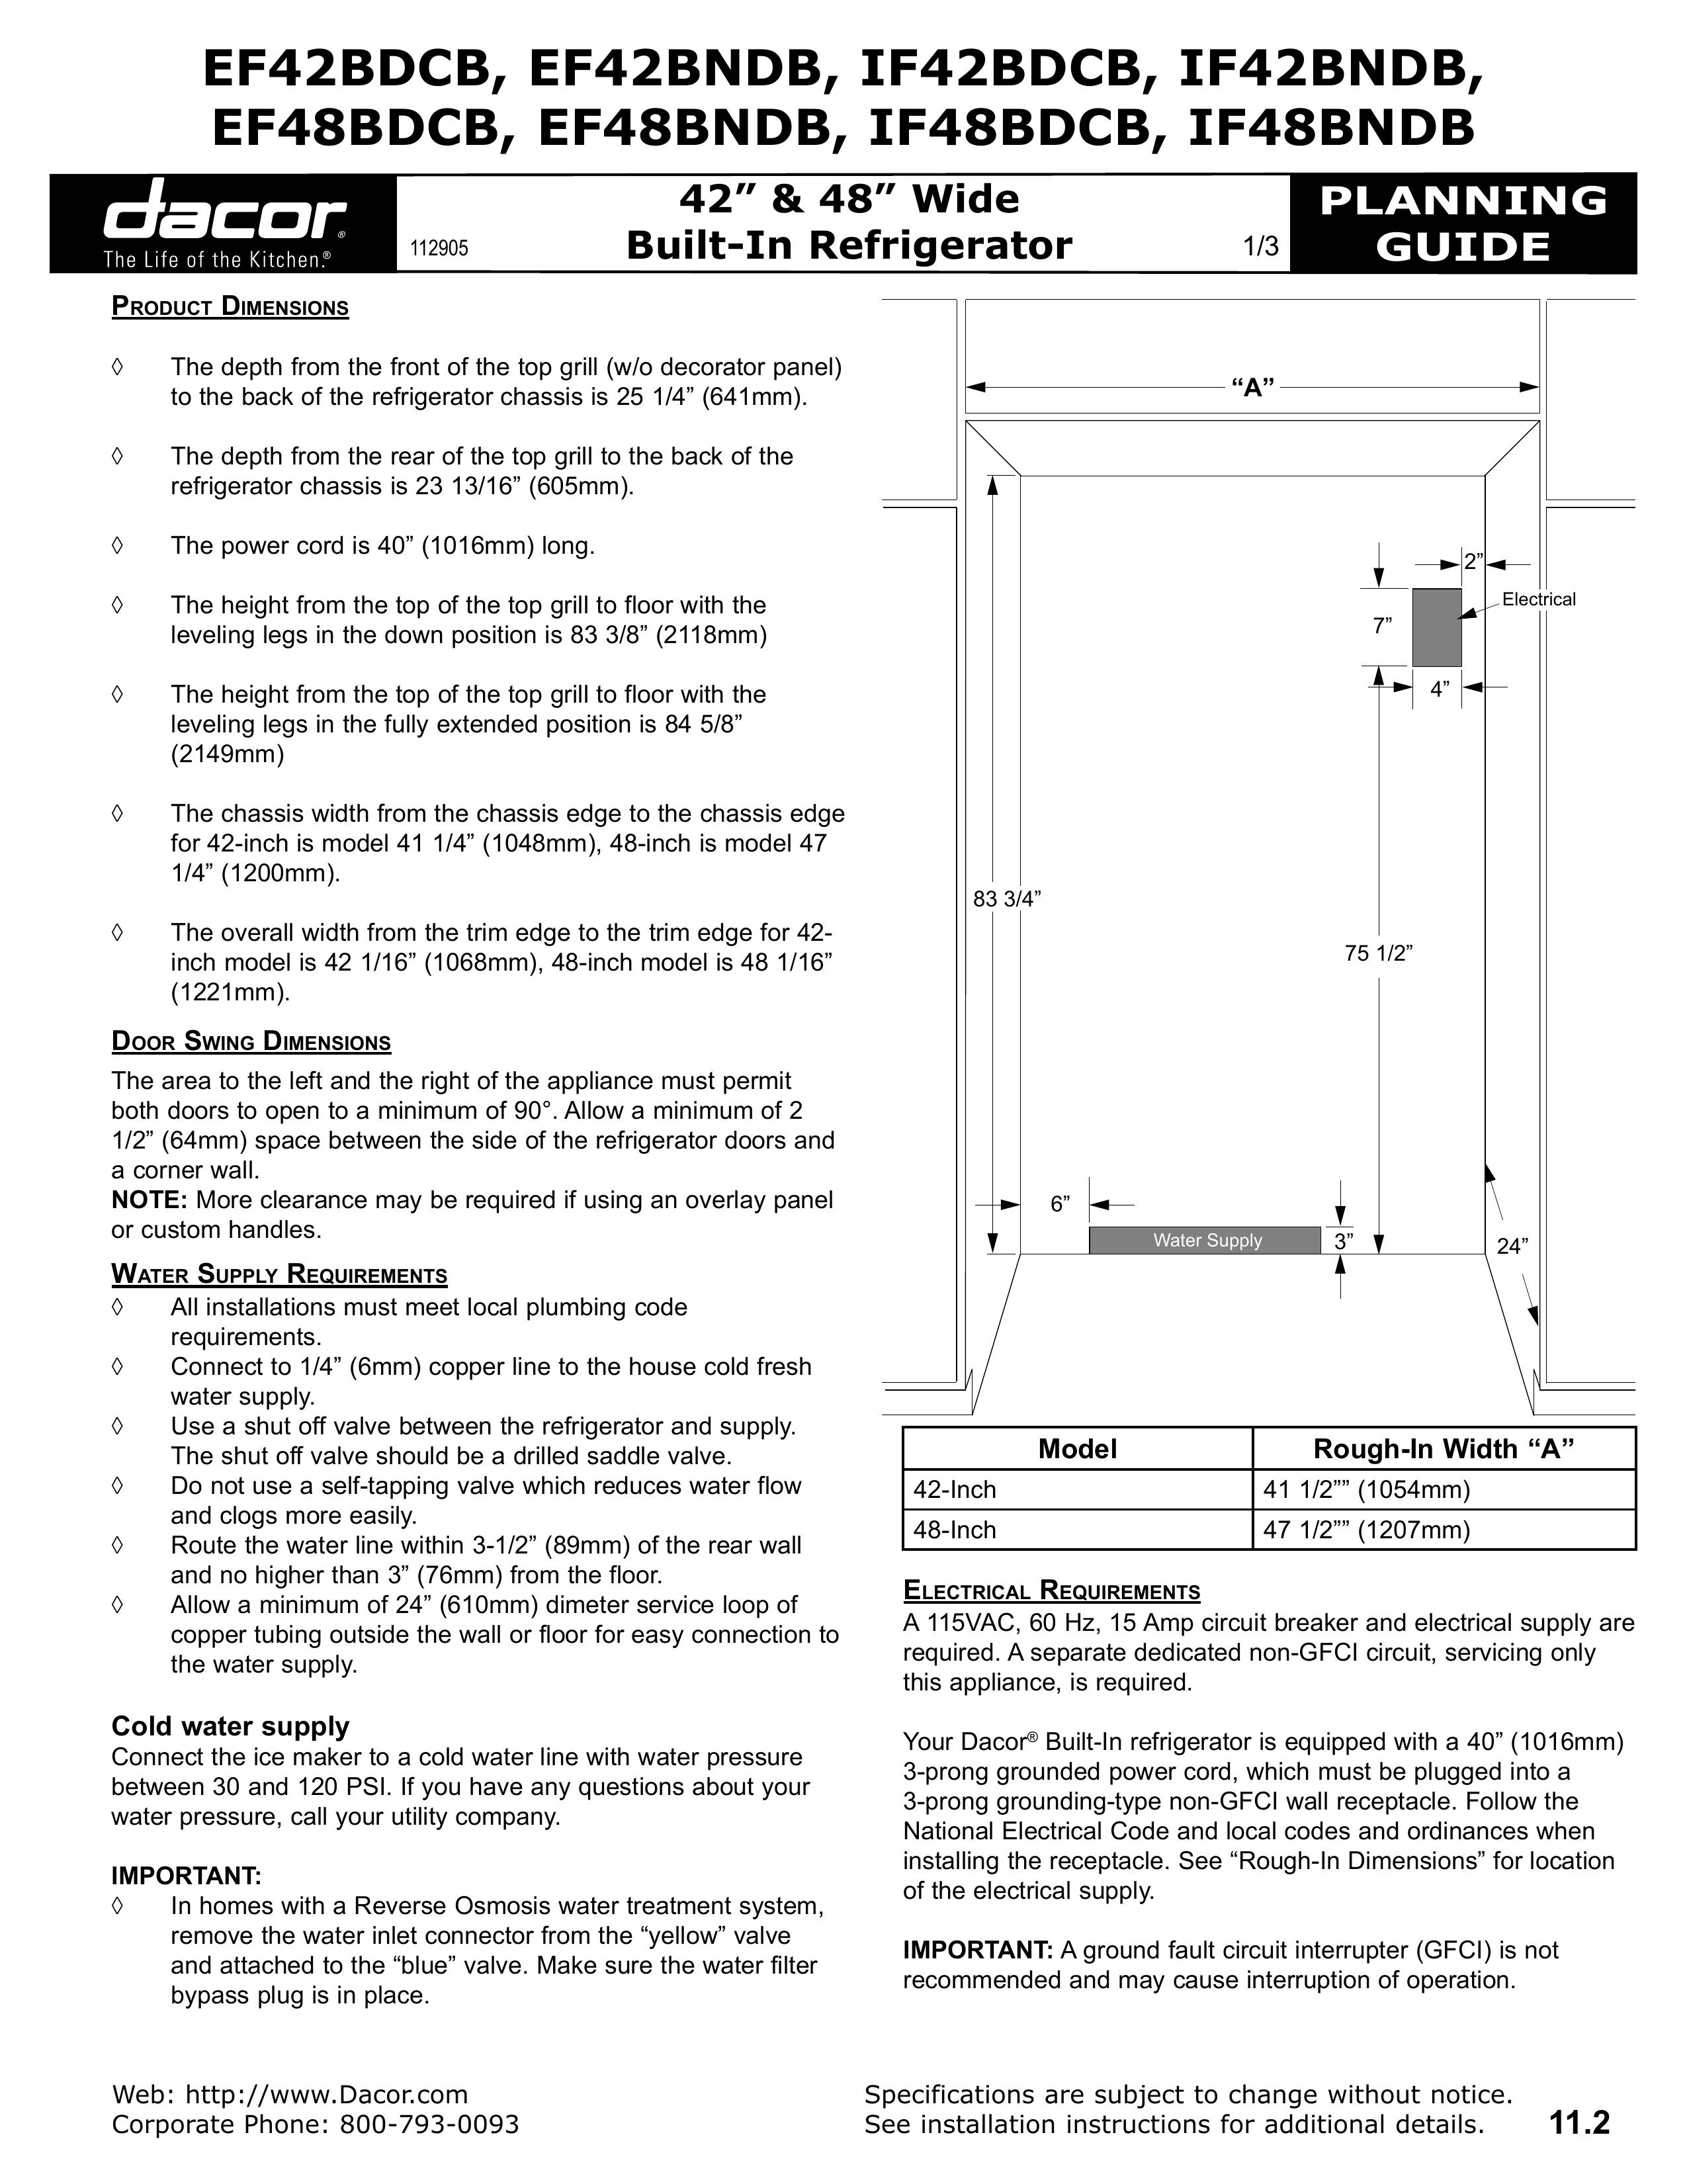 Dacor IF42BNDB Refrigerator User Manual